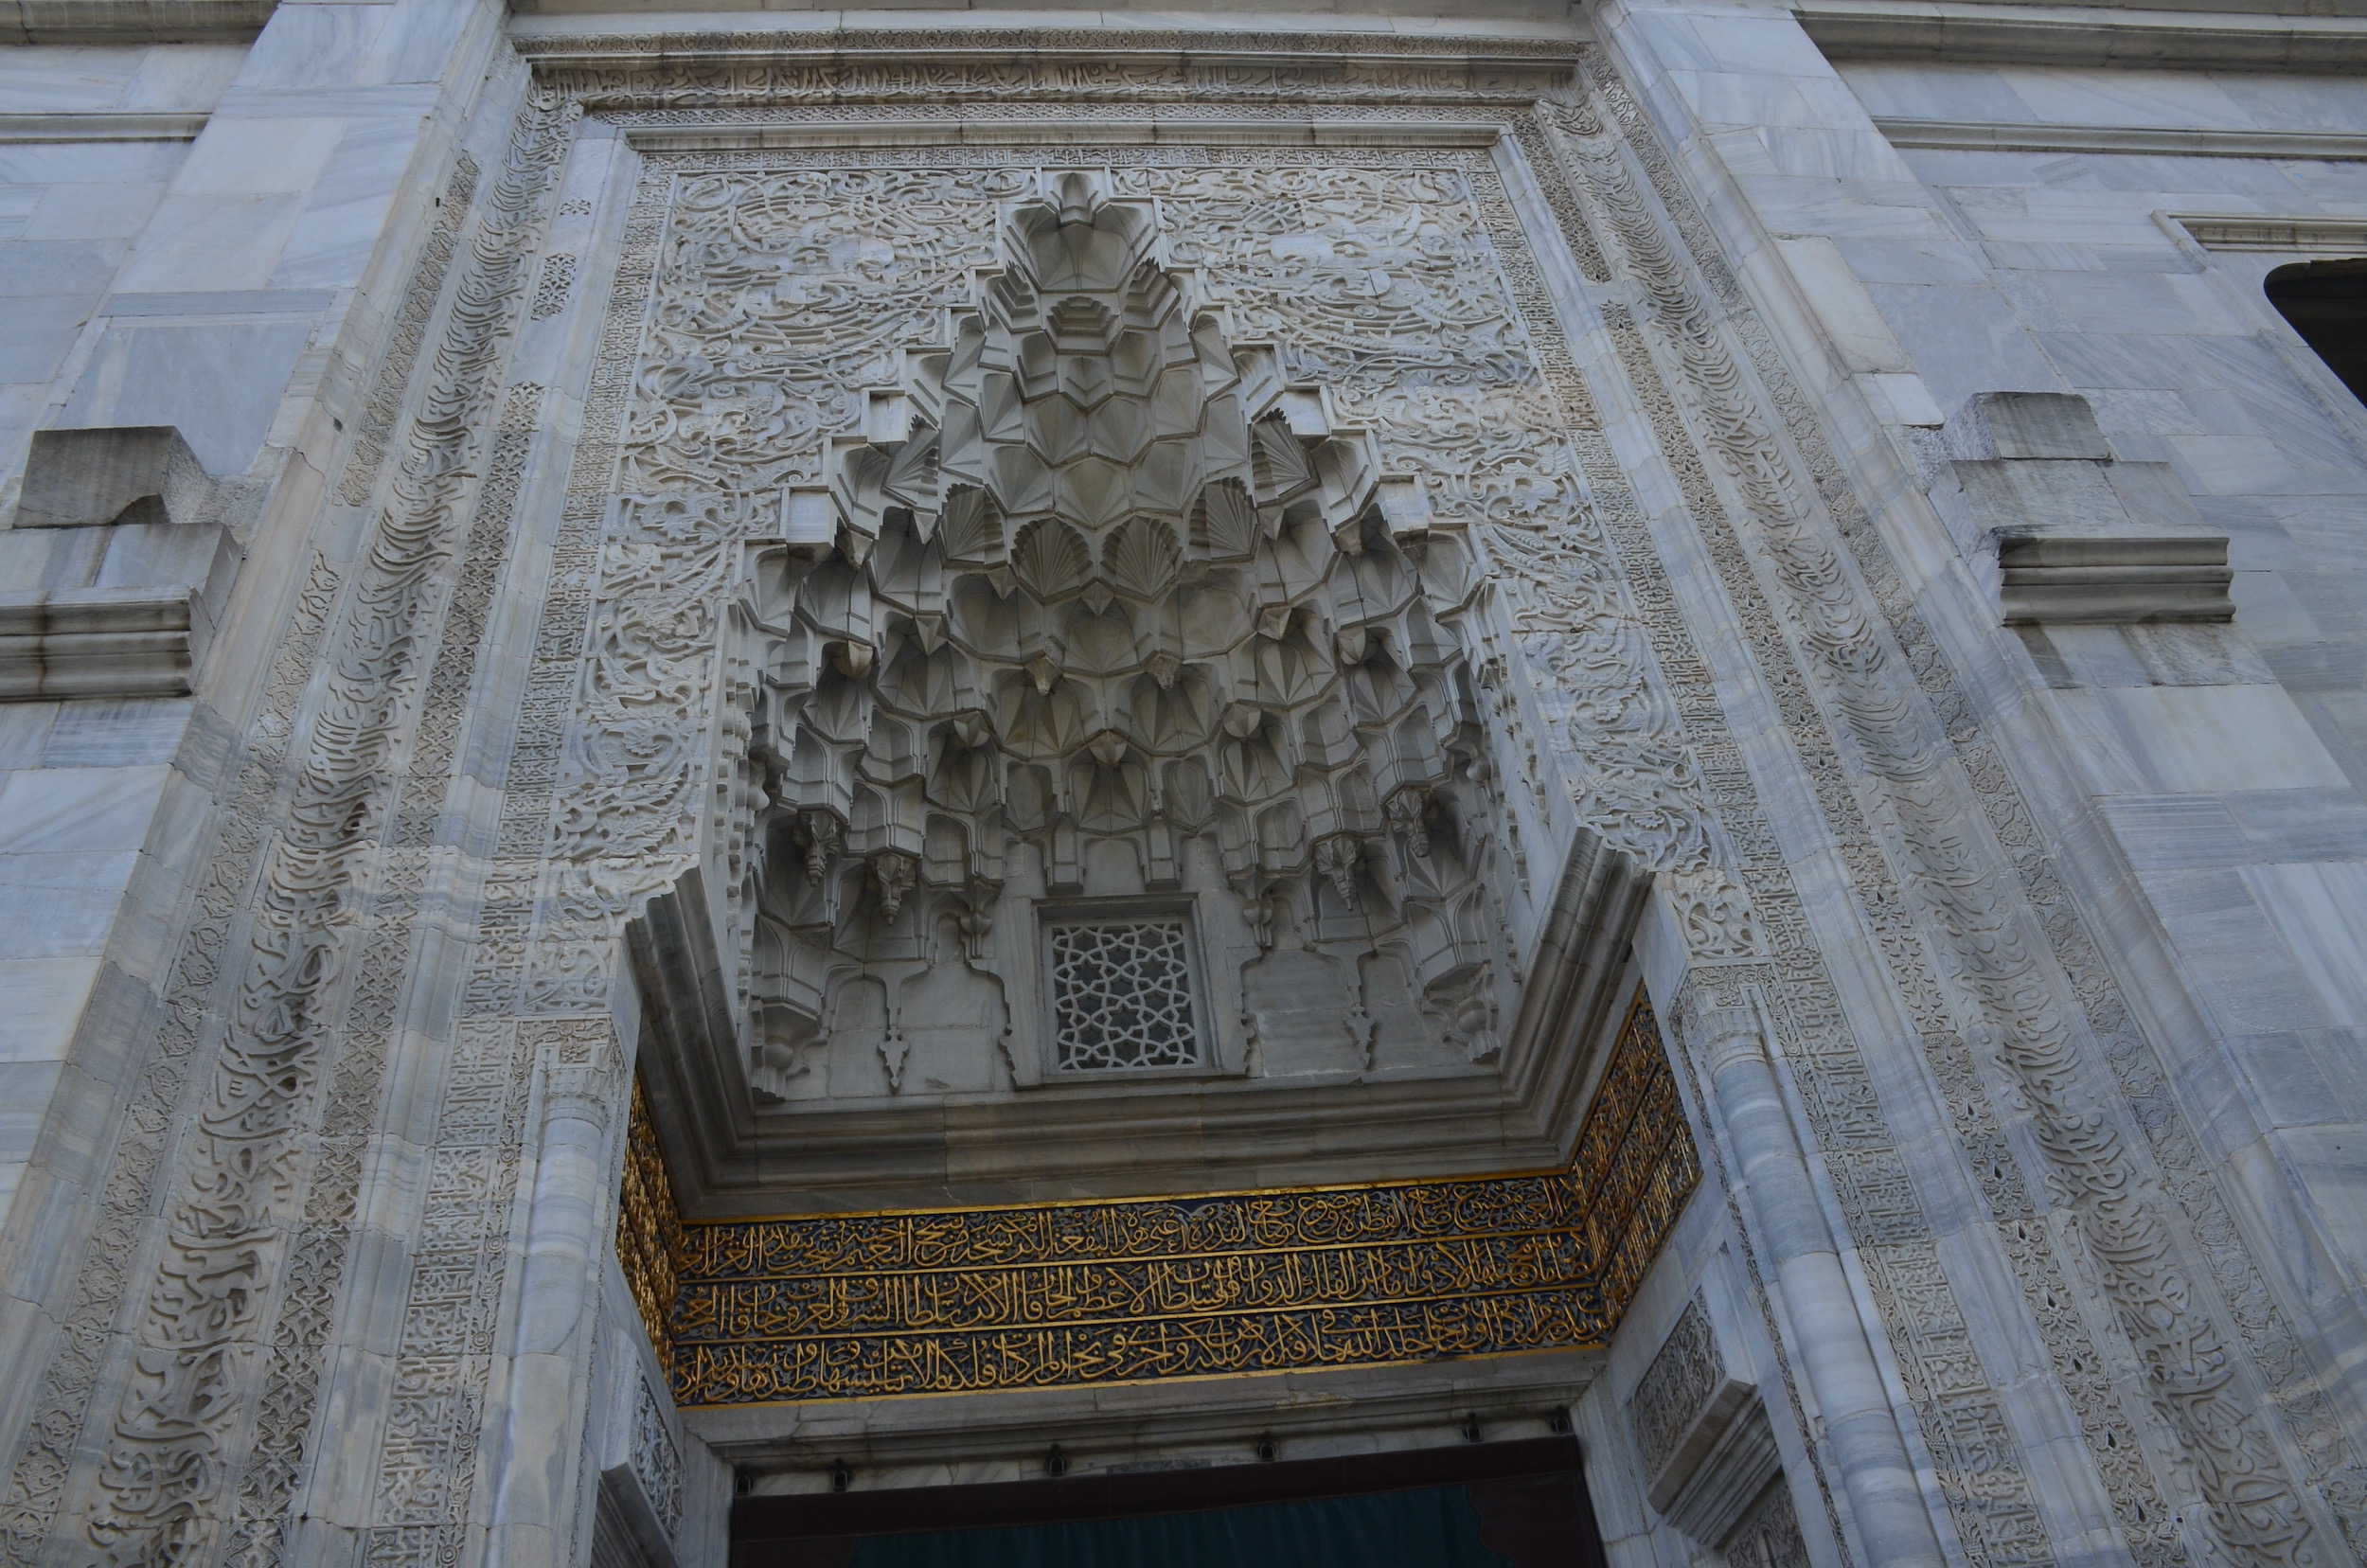 Muqarnas niche above the entrance portal at the Green Mosque in Bursa, Turkey